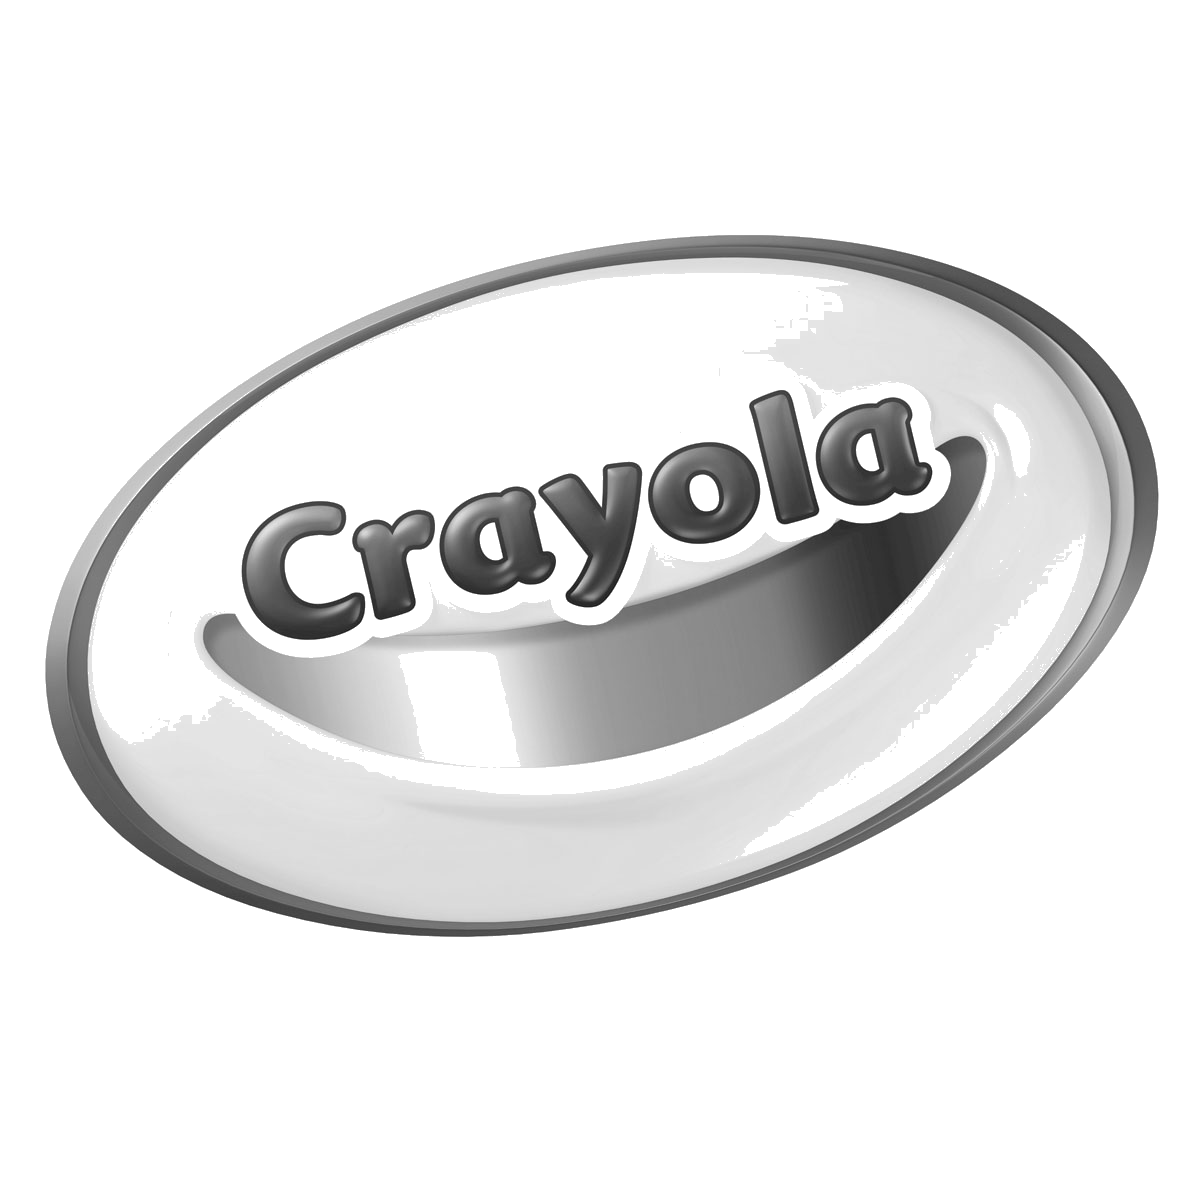 Crayola (logo).png